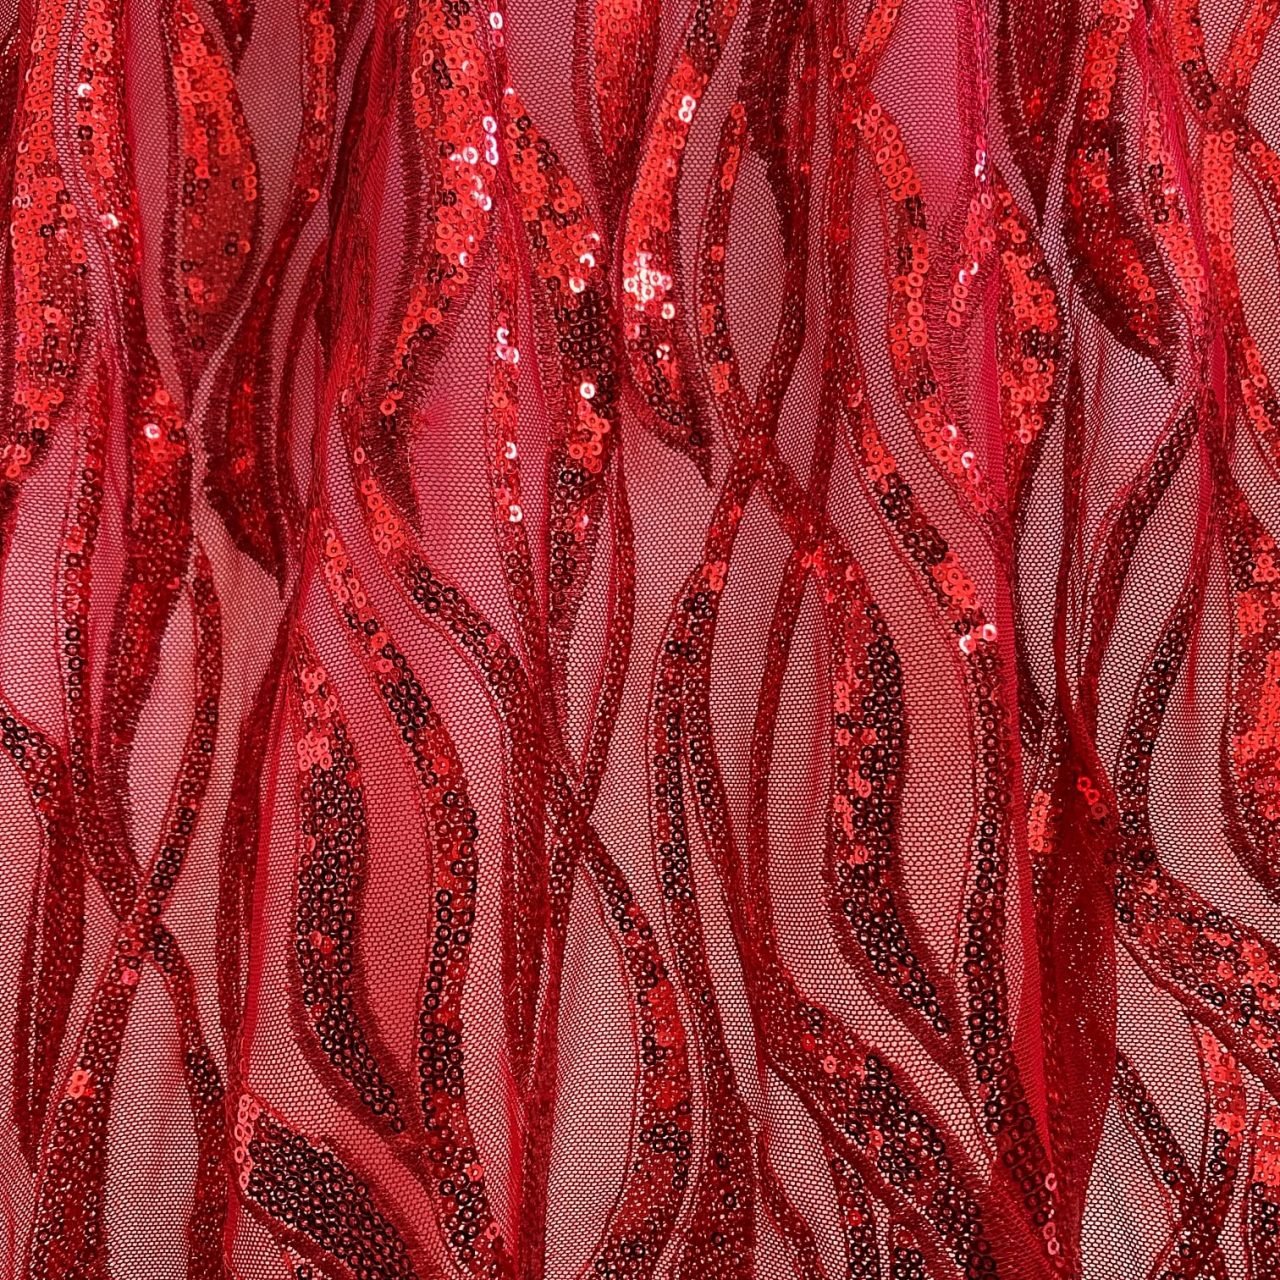 https://www.solidstonefabrics.com/wp-content/uploads/2018/06/ADMIRE-SEQUIN-MESH-RED-SEQUIN-MESH-FABRIC-BY-THE-YARD-CLOSEUP-DRAPED.jpg